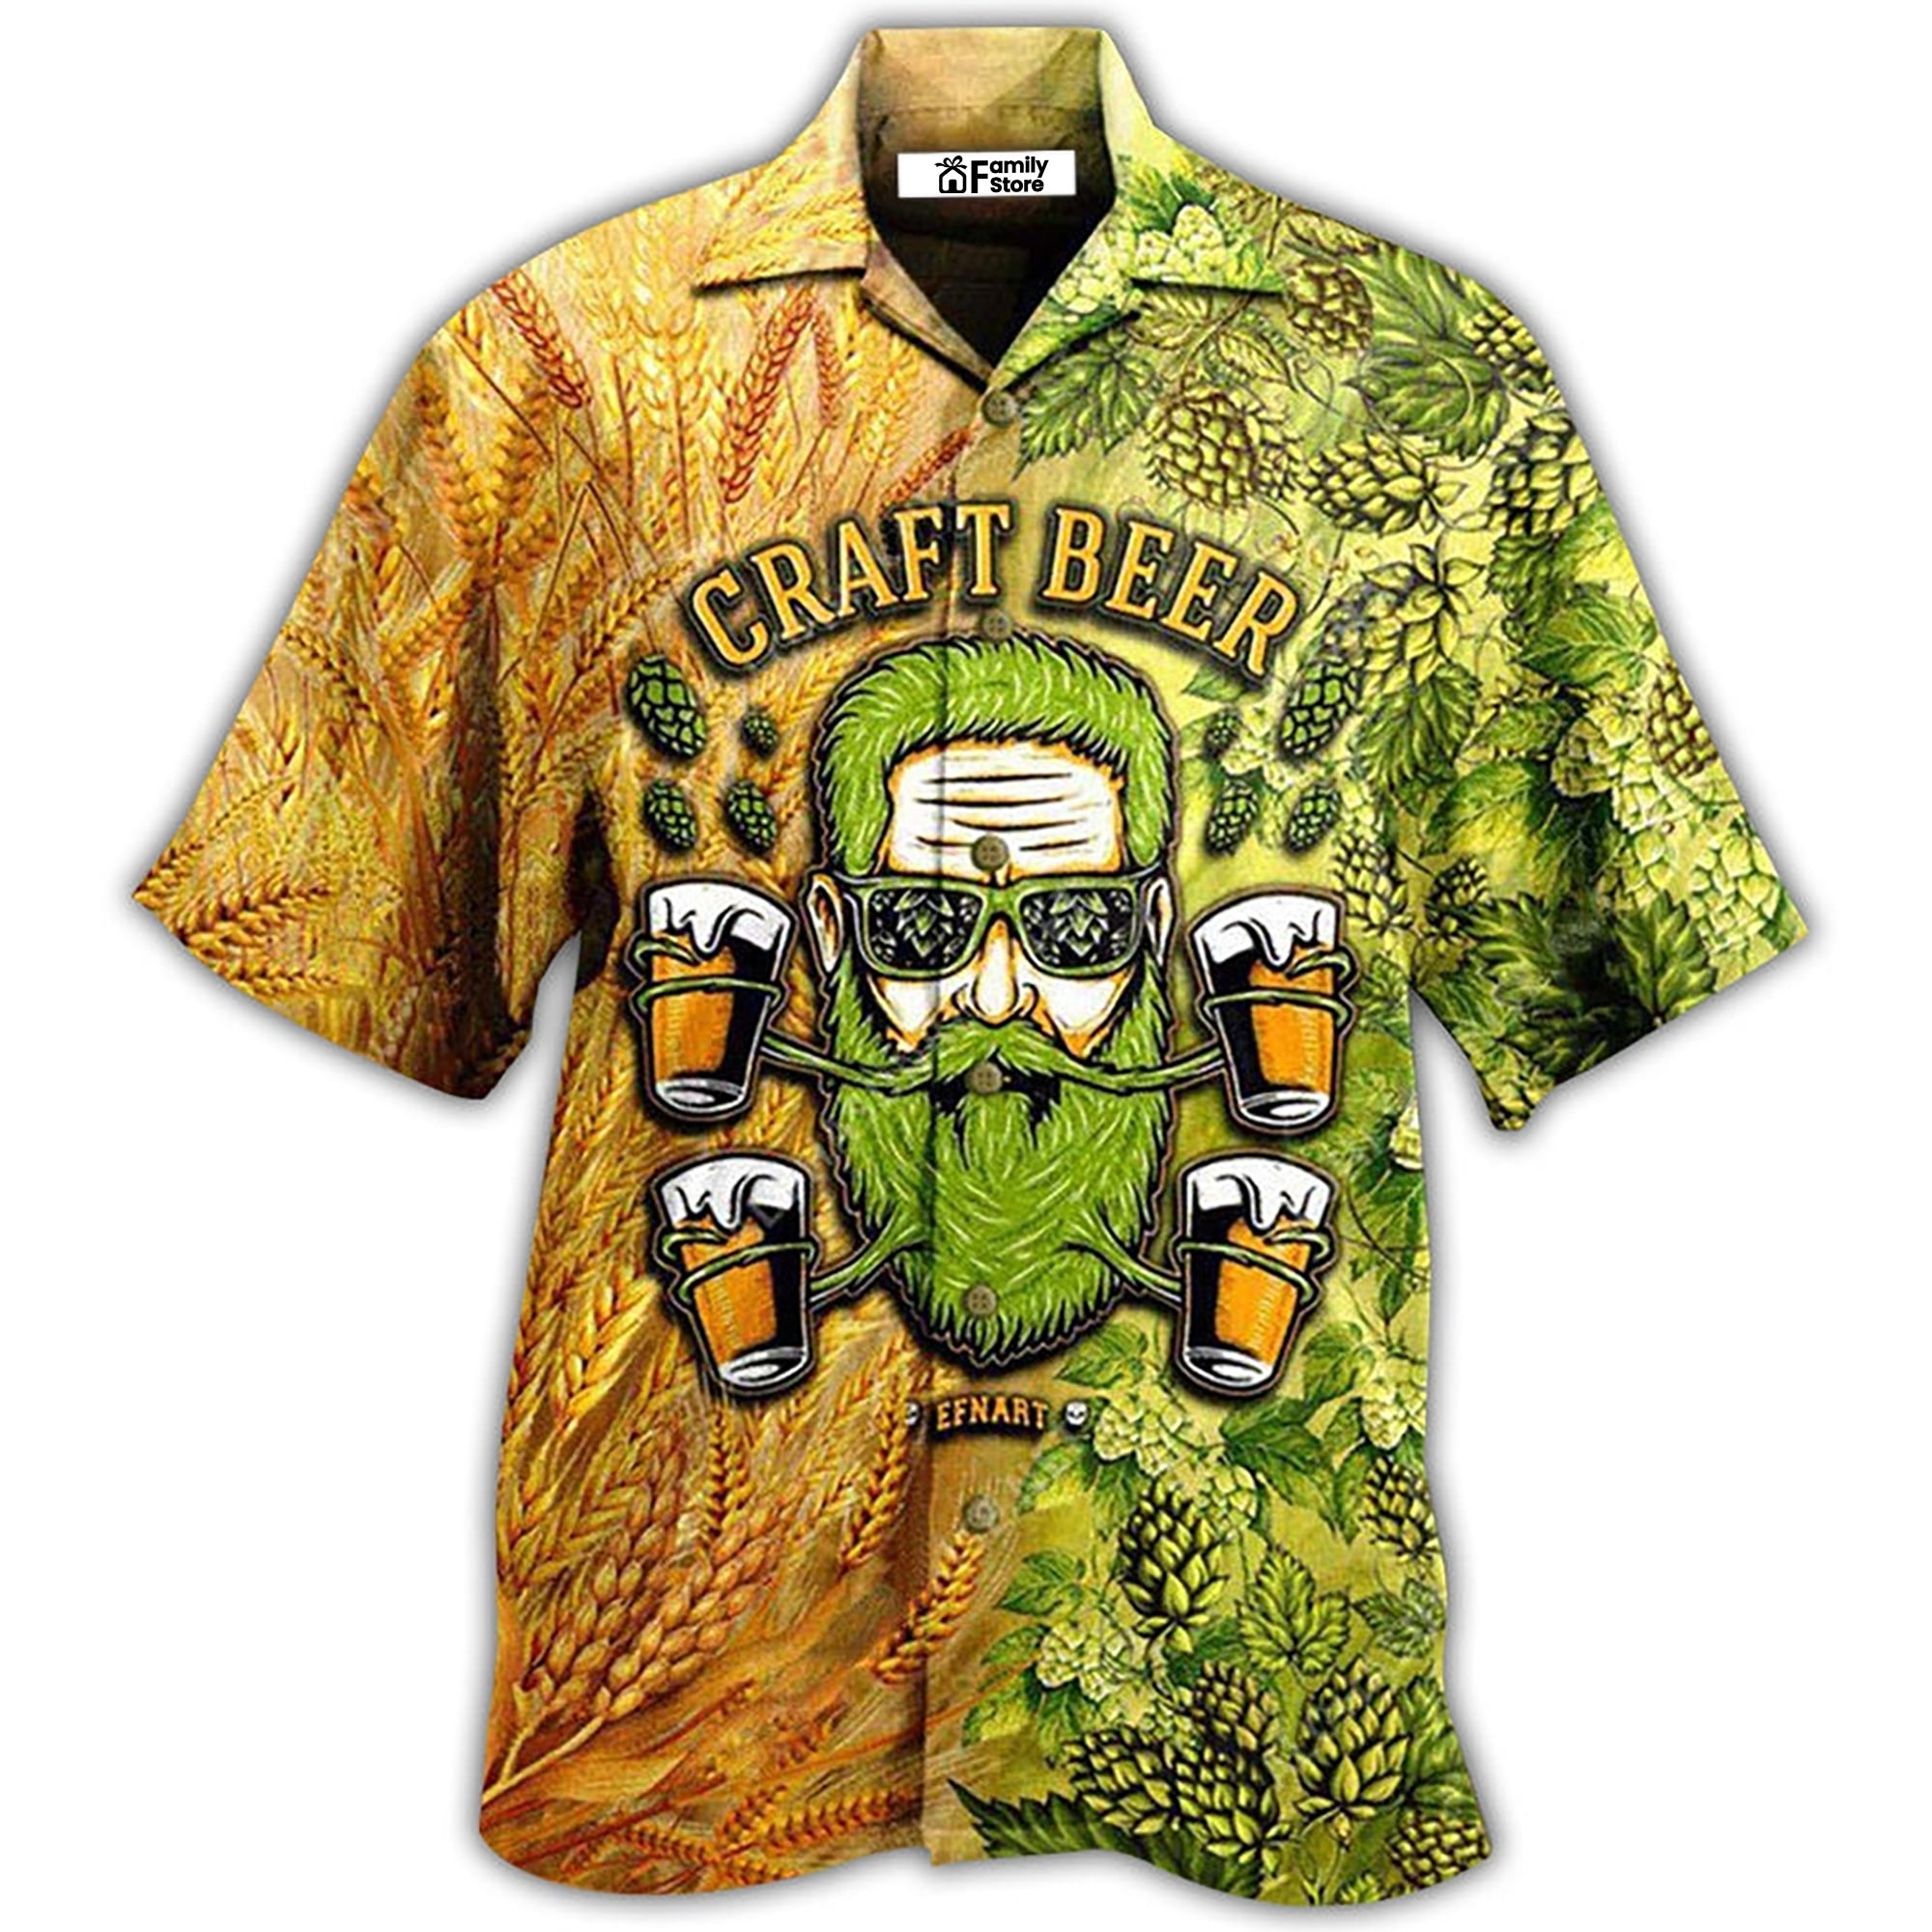 Beer Drink First Think Later - Hawaiian Shirt